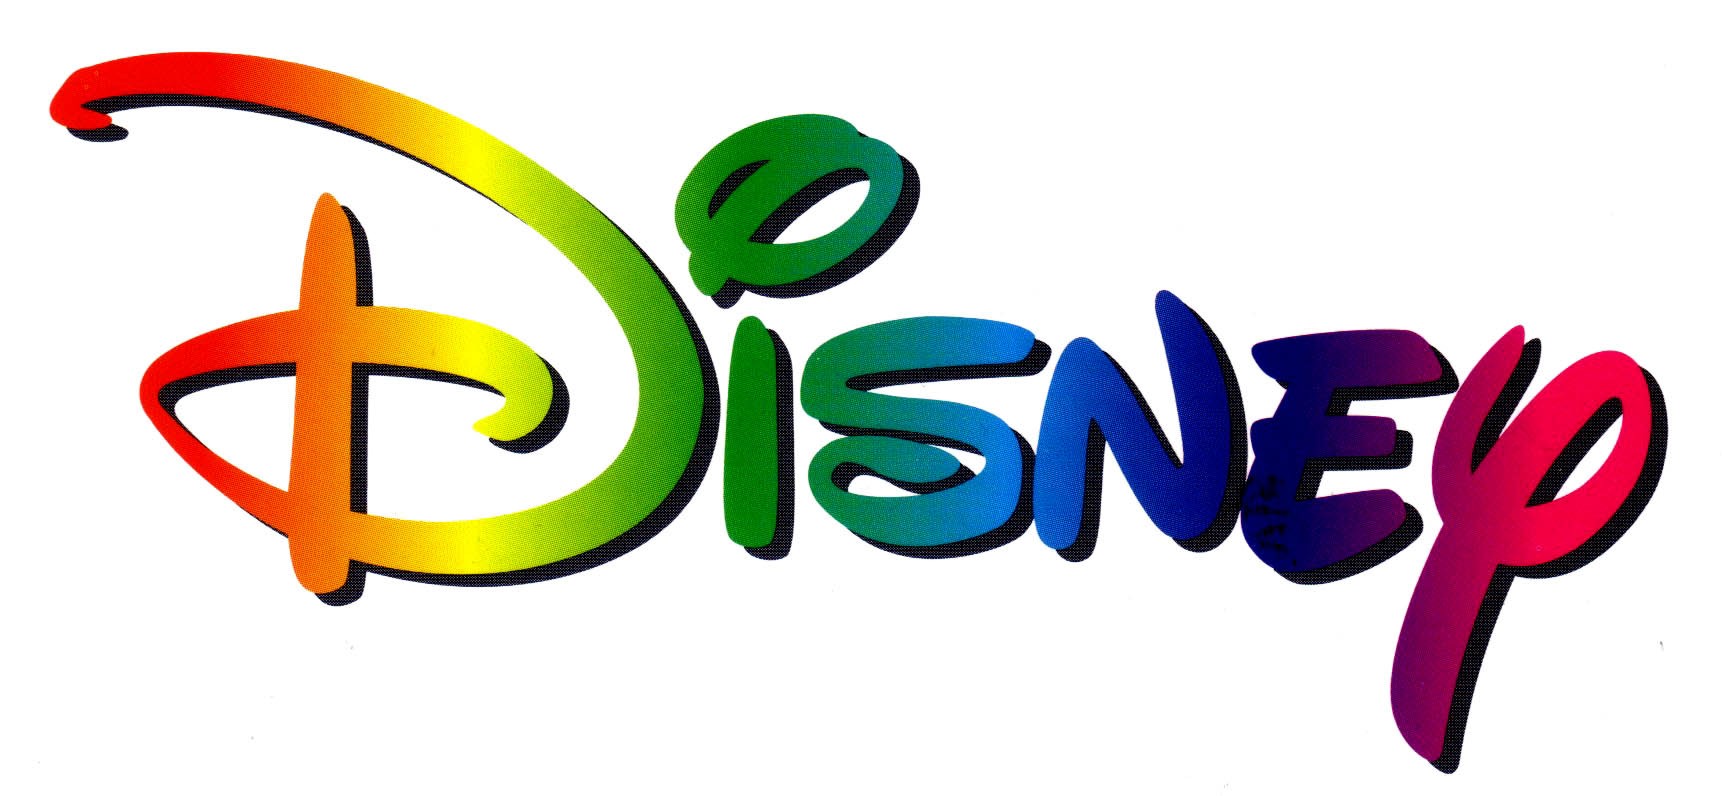 Walt disney logo Wallpaper